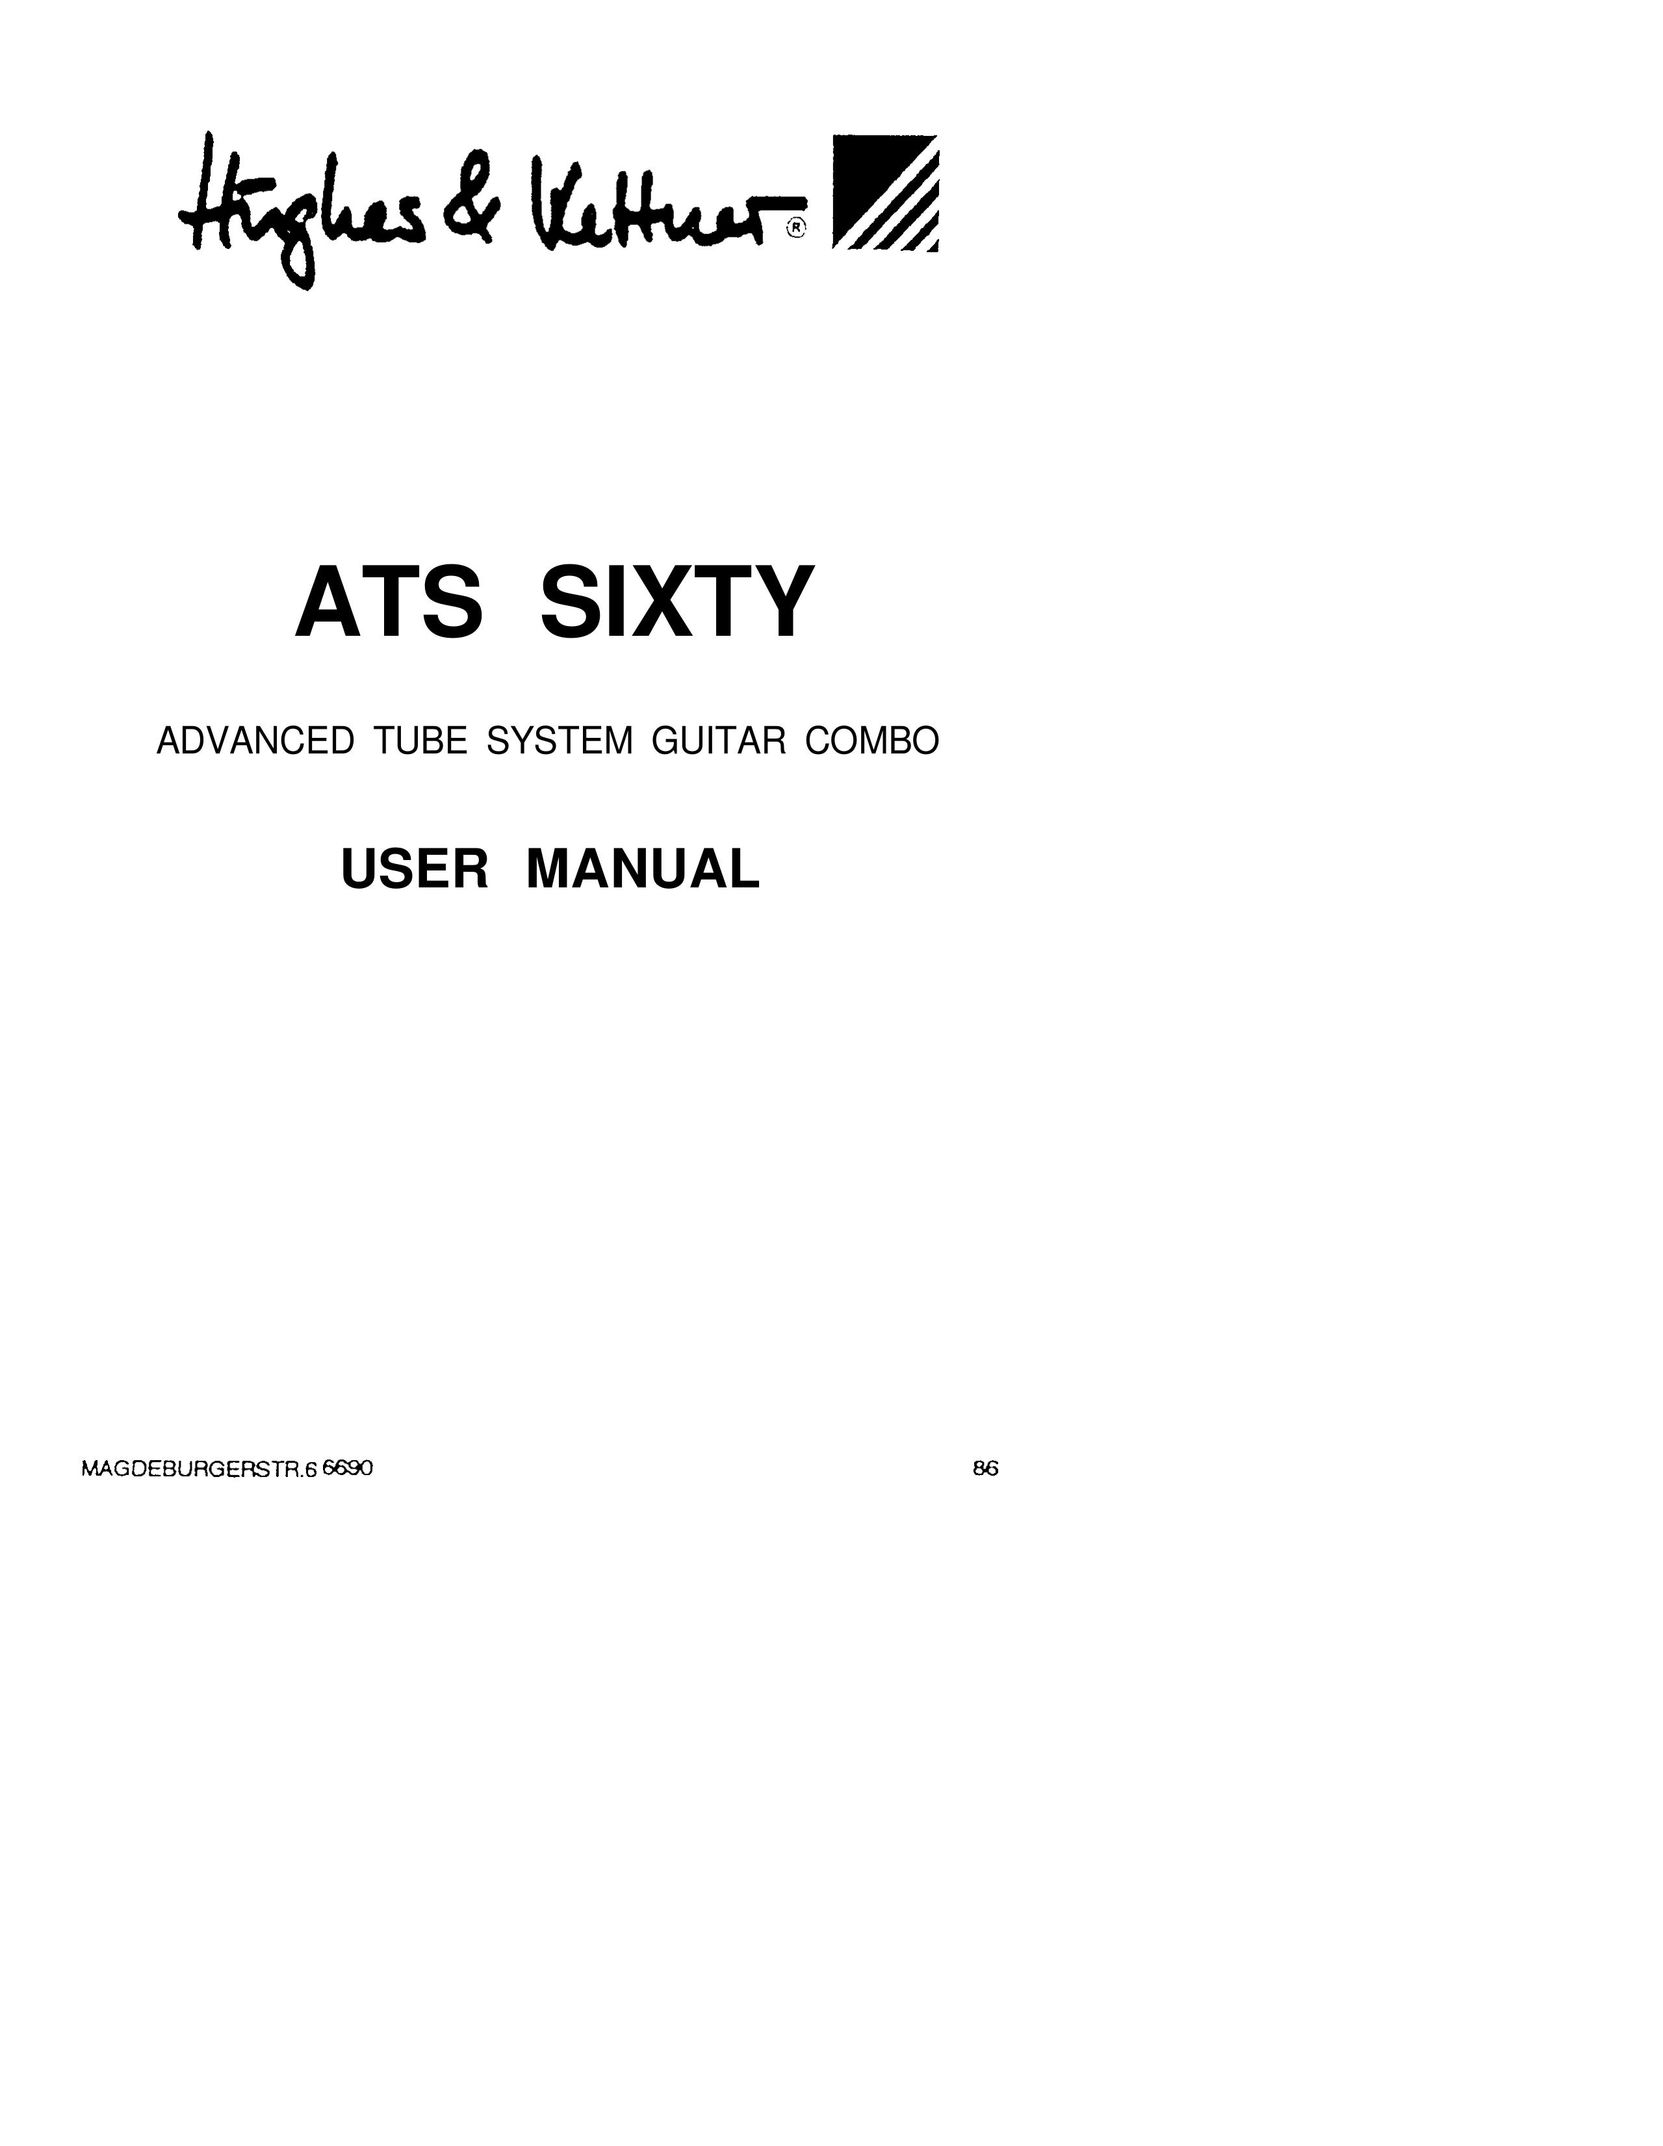 Hughes & Kettner ATS SIXTY Stereo Amplifier User Manual